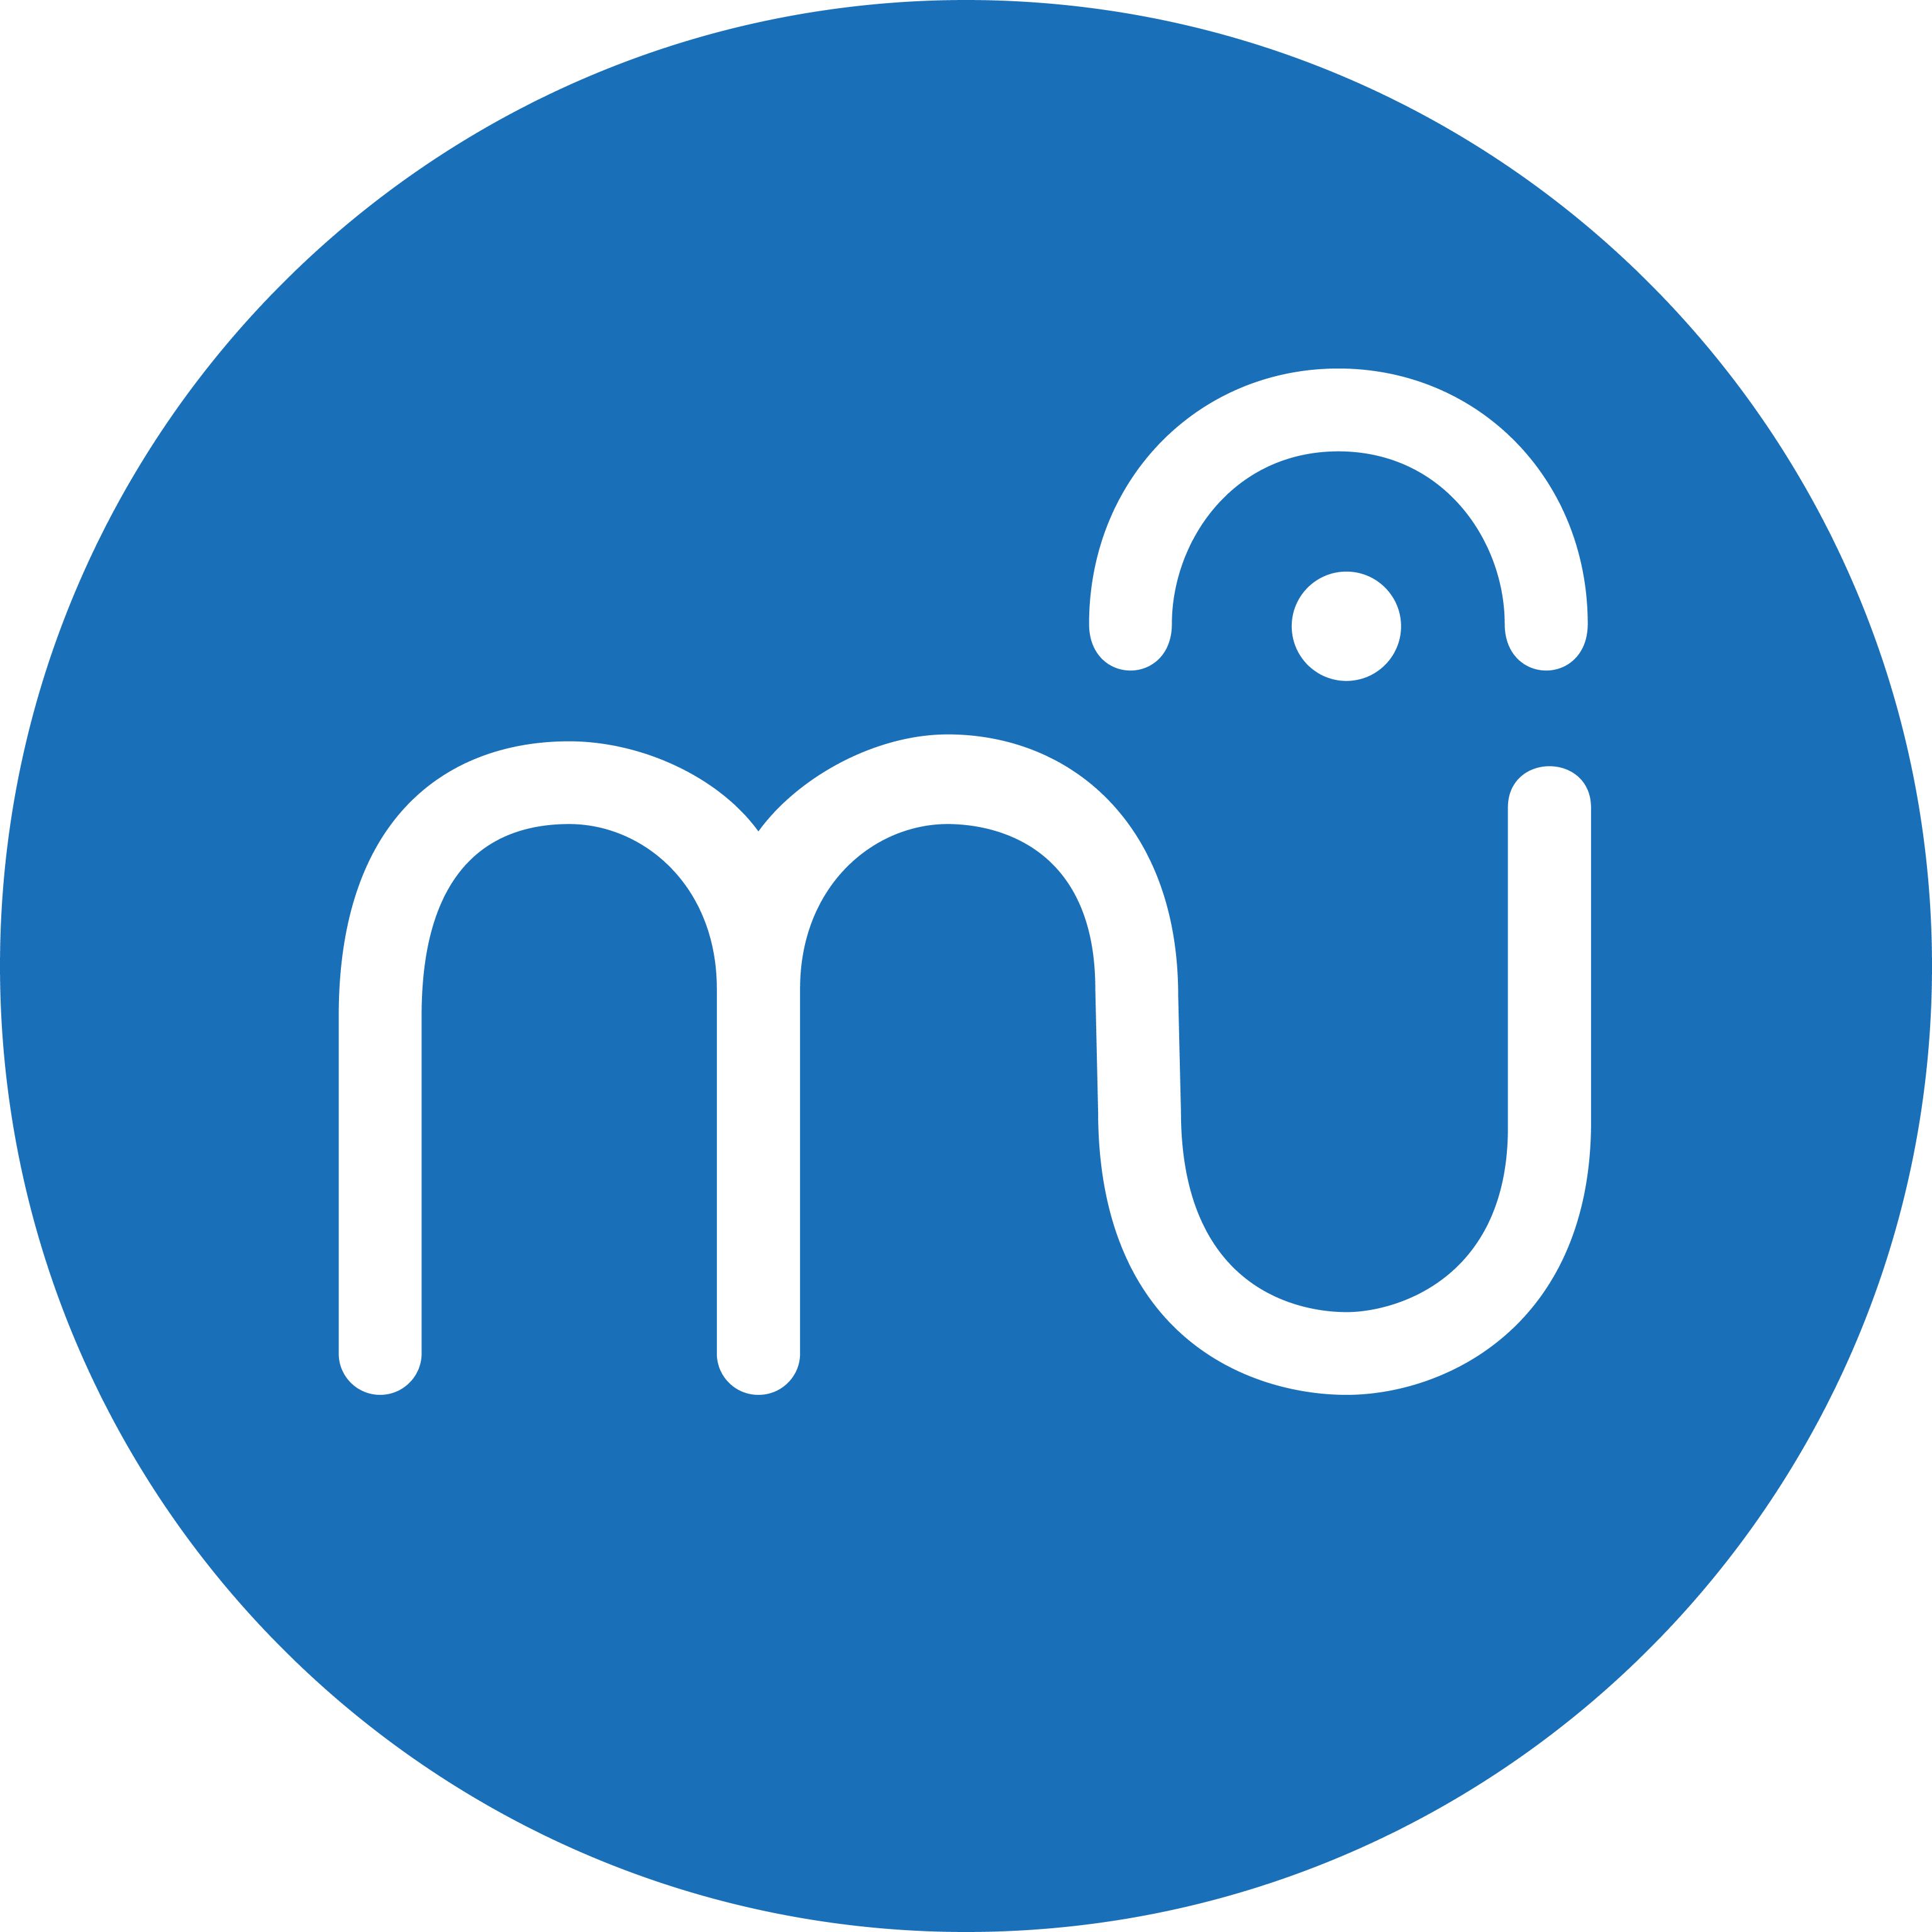 MU Logo - Logos and Graphics